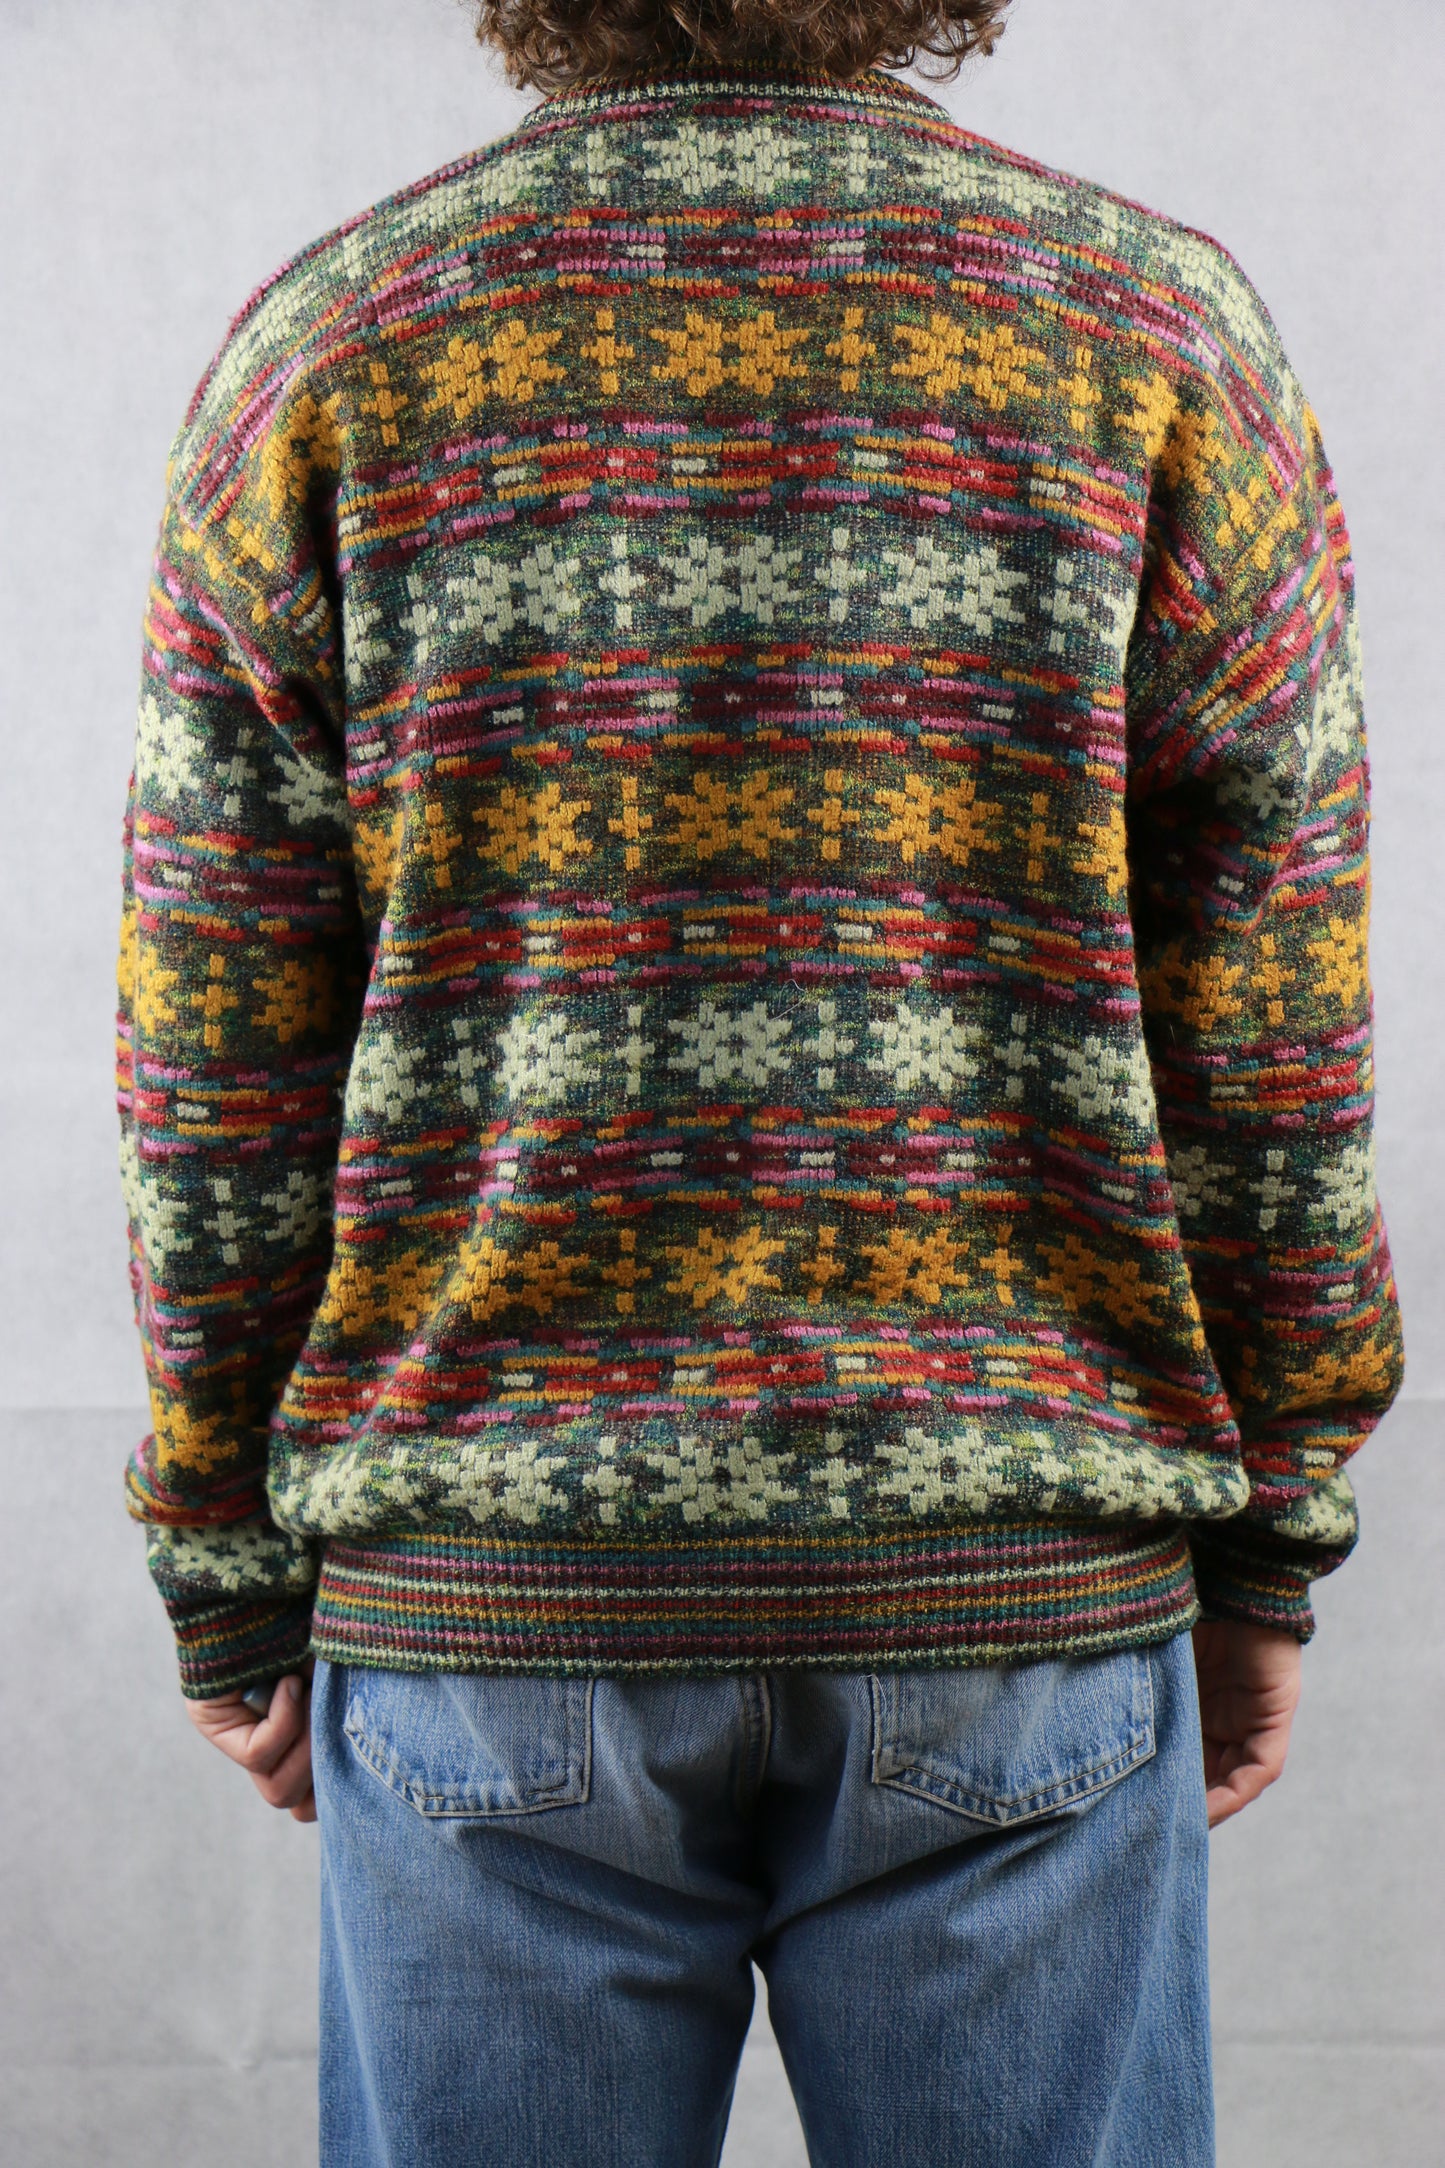 Missoni Exemple Sweater 'L', vintage store clochard92.com